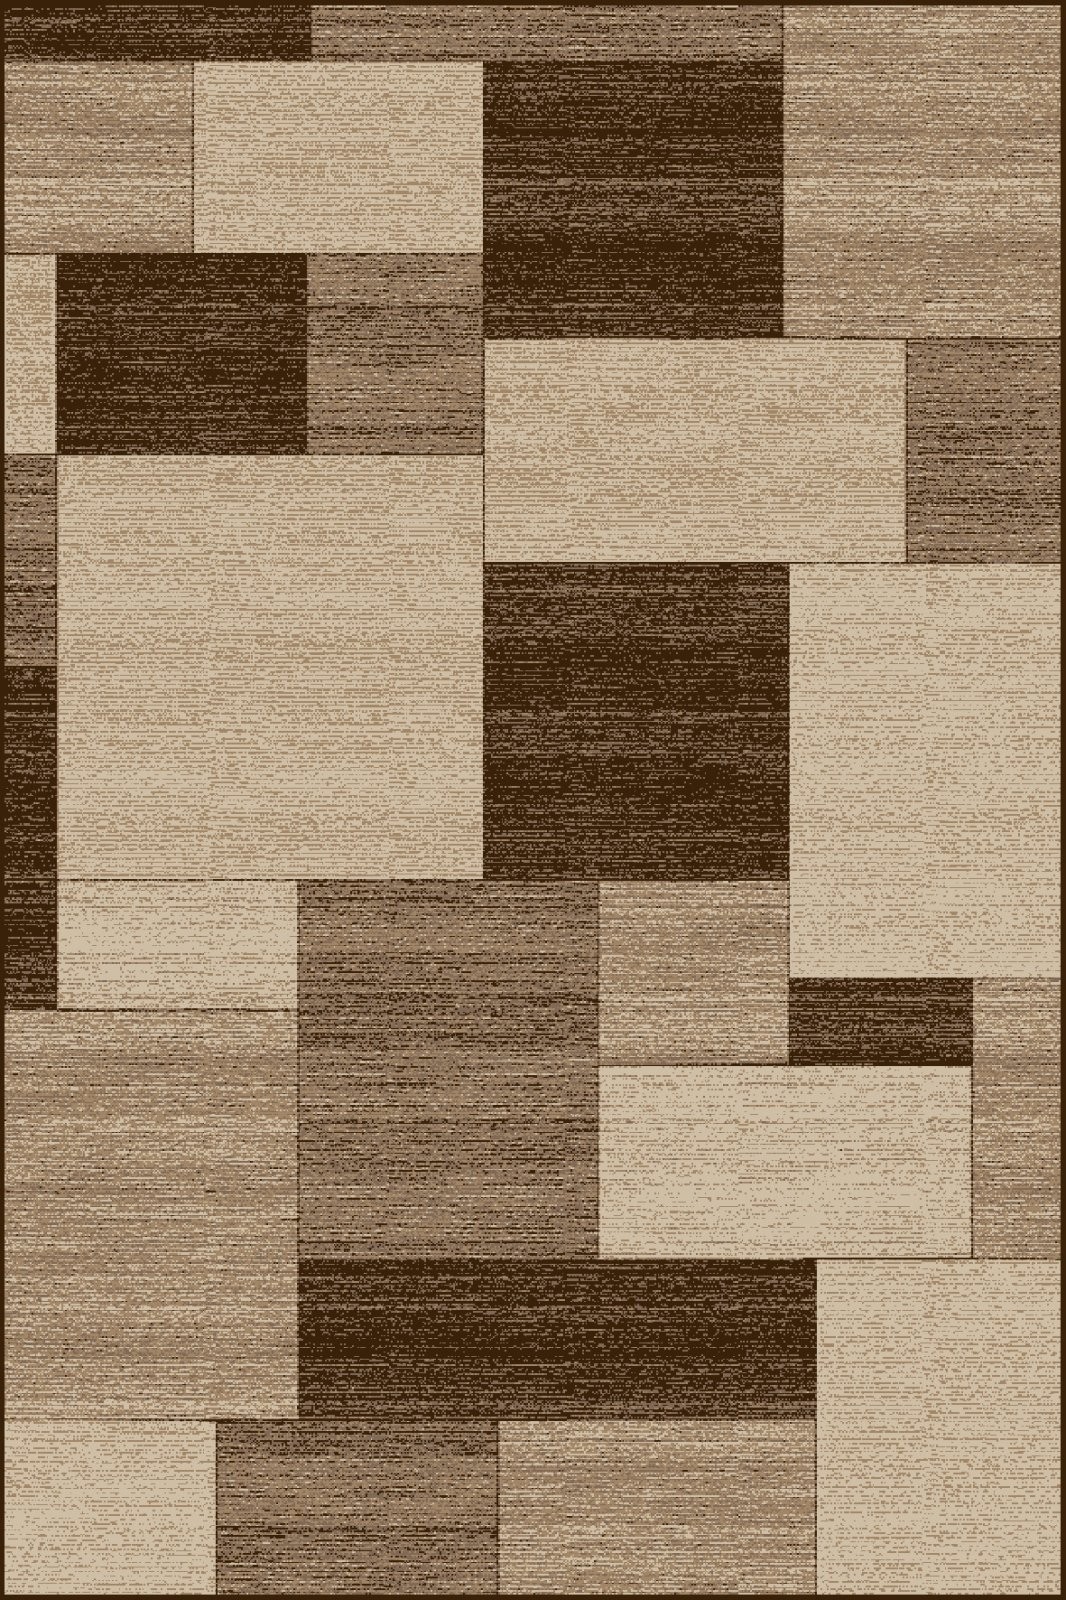 Covor Dreptunghiular, 300 x 400 cm, Bej / Maro, Daffi 13027